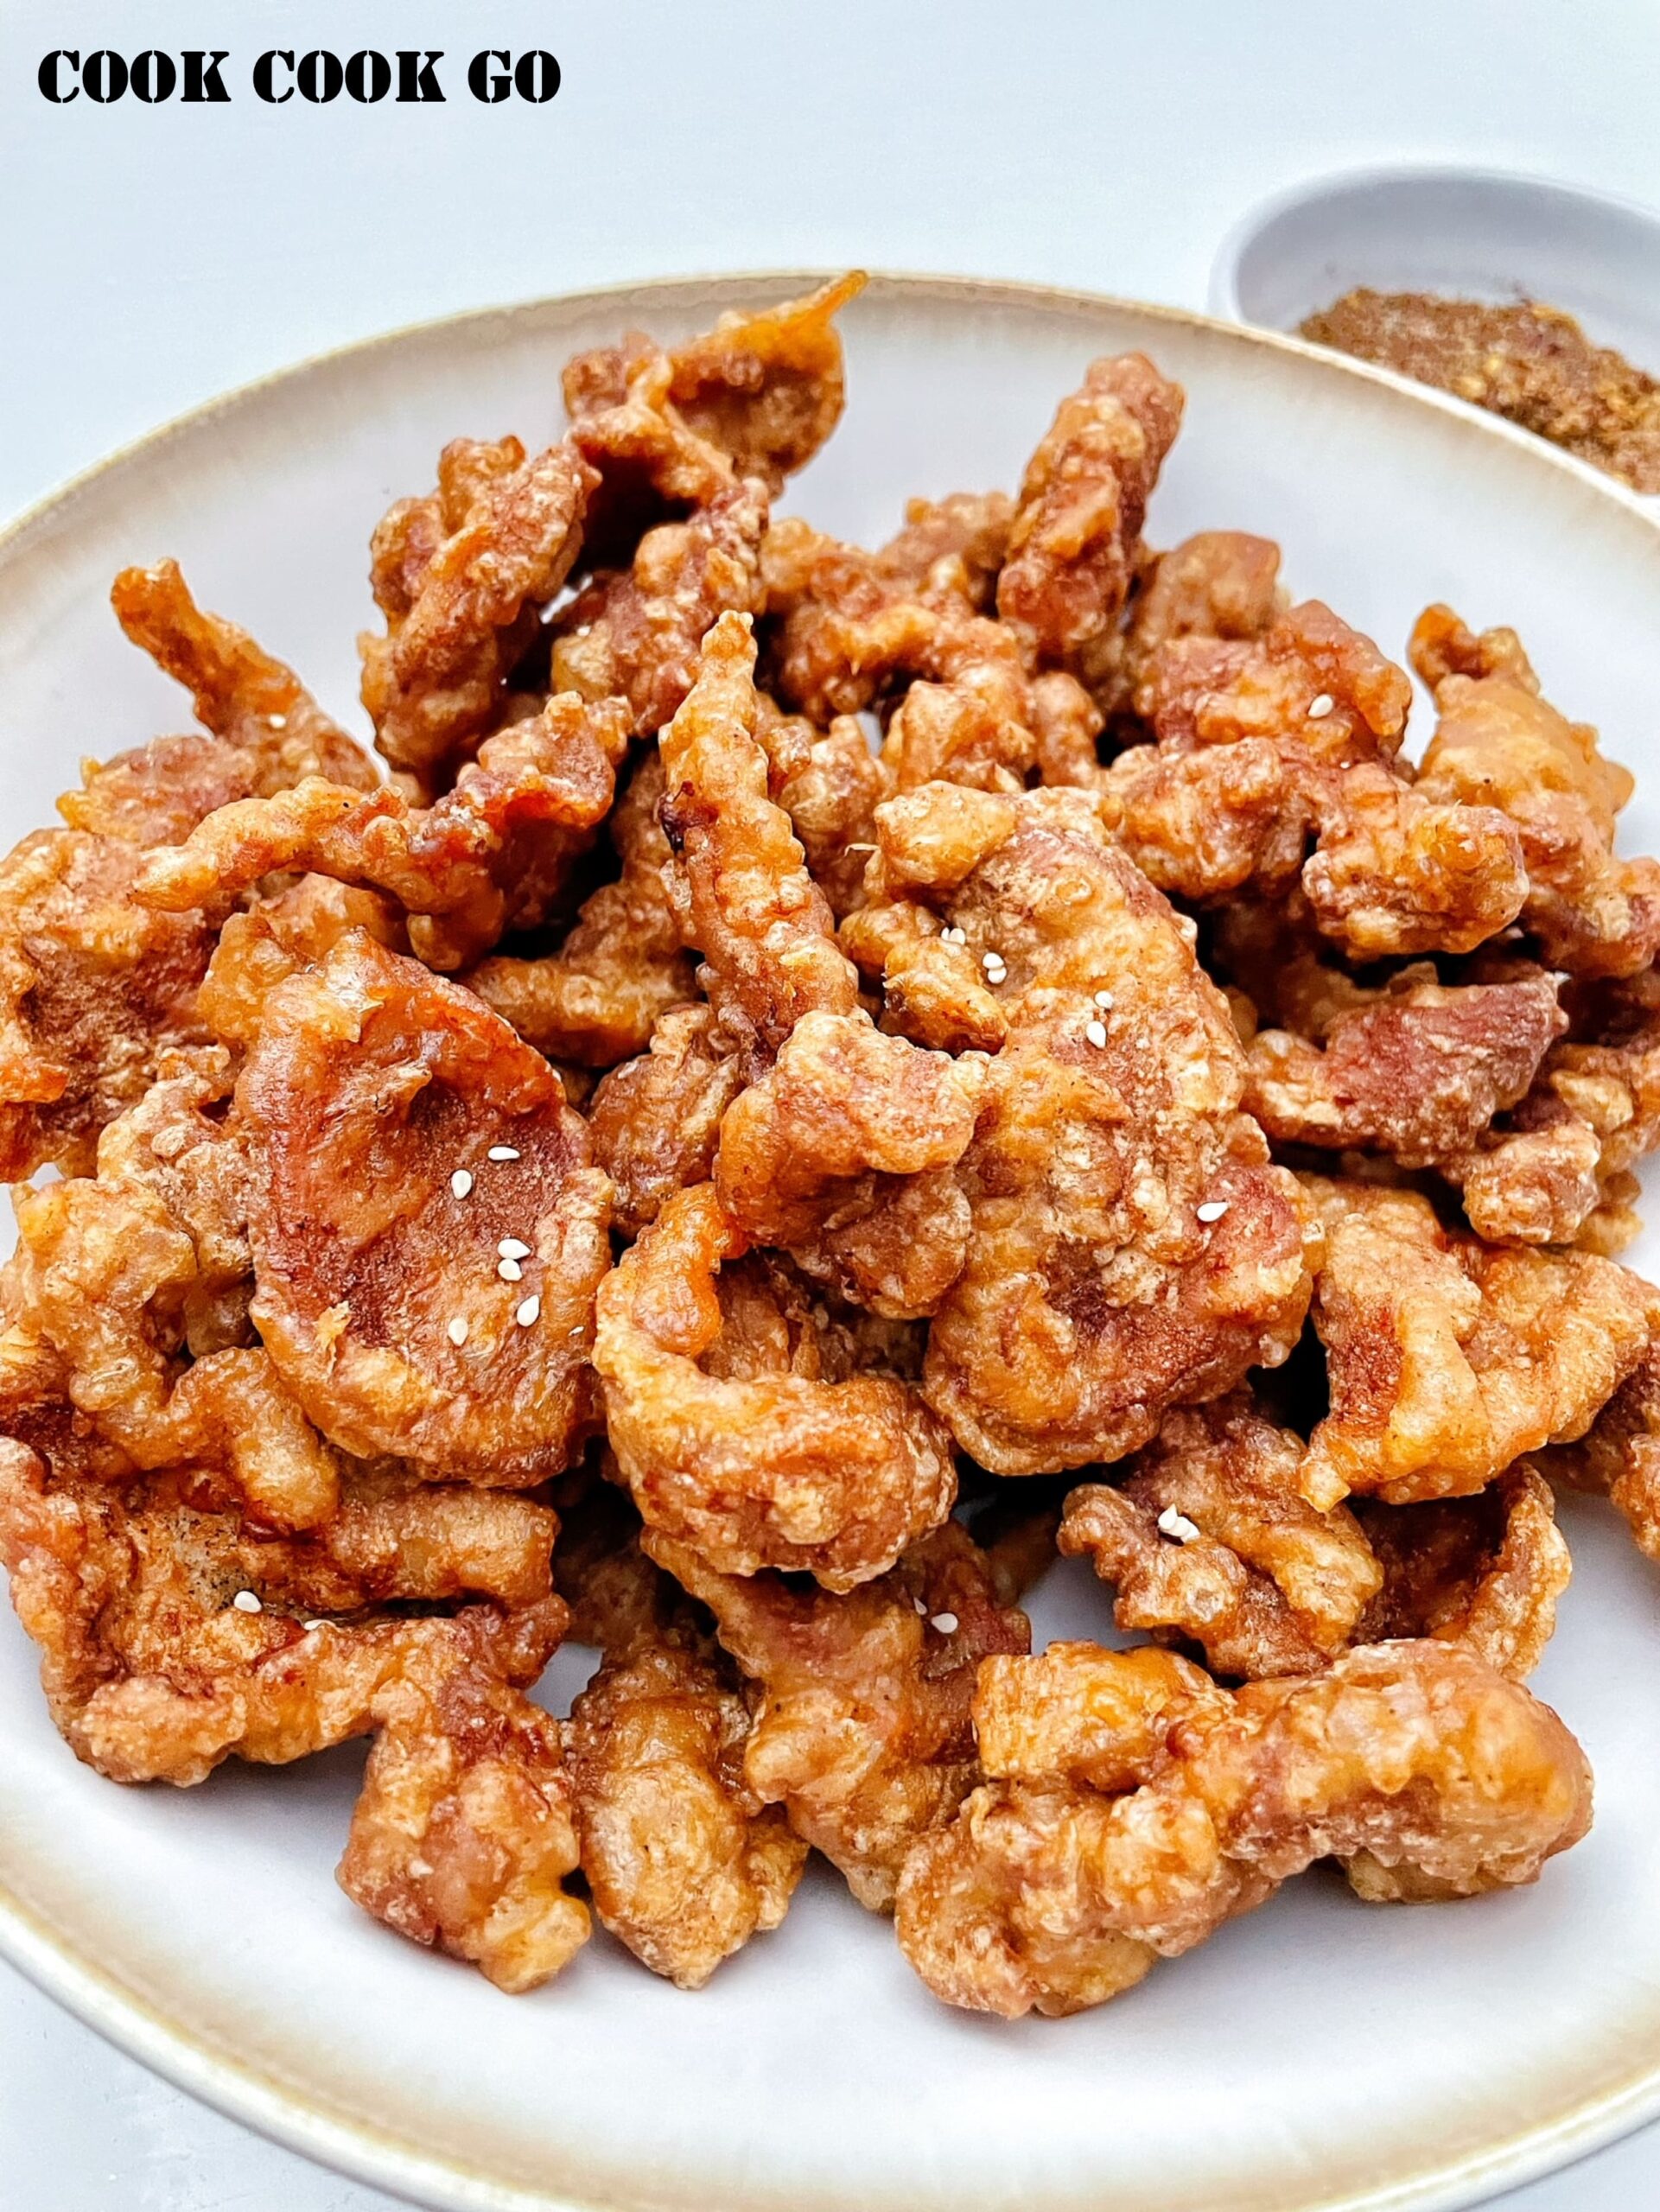 Sichuan Crispy Fried Pork (小酥肉)